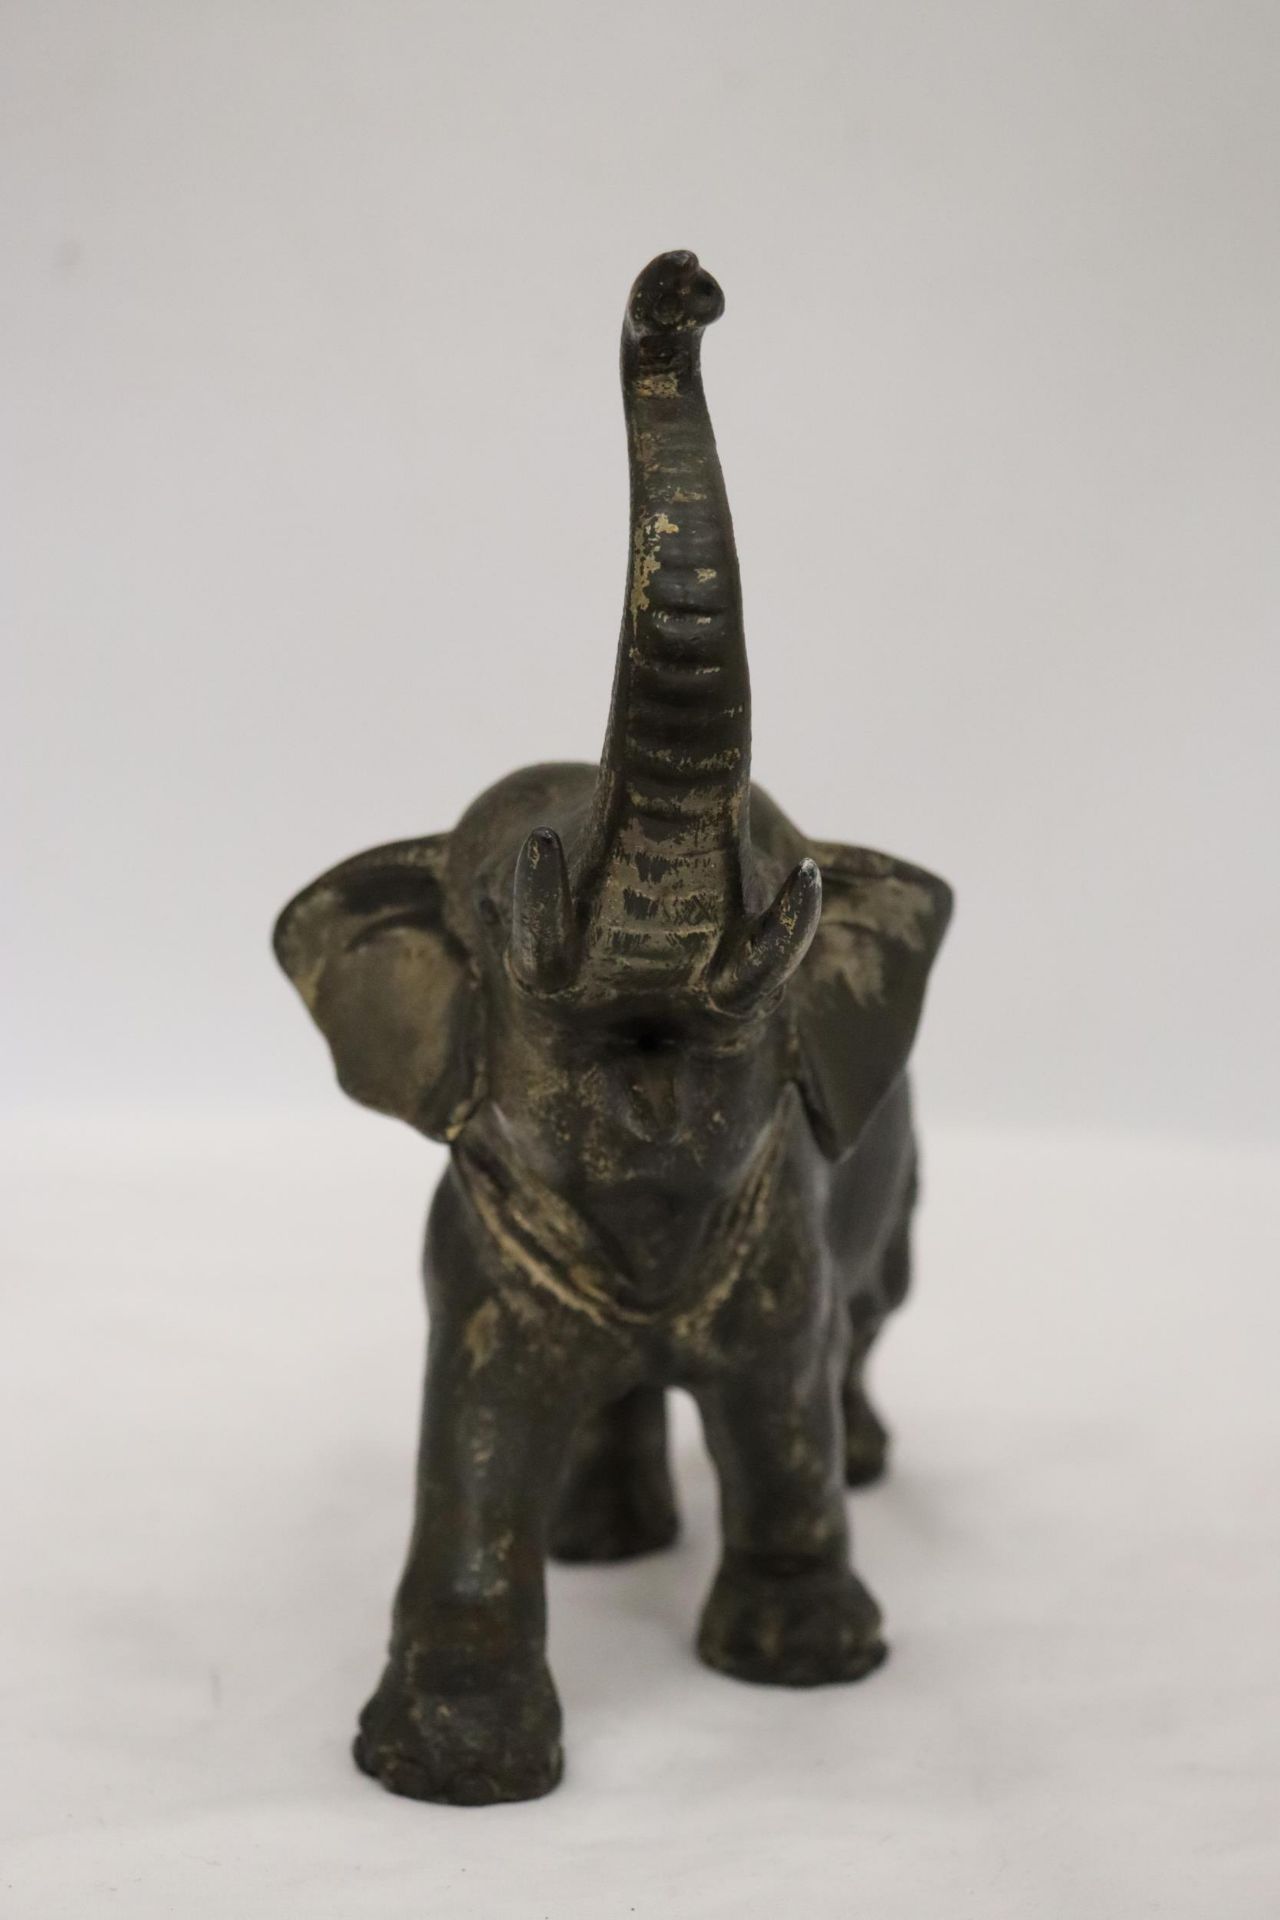 A HEAVY METAL FIGURE OF AN ELEPHANT - Image 2 of 5